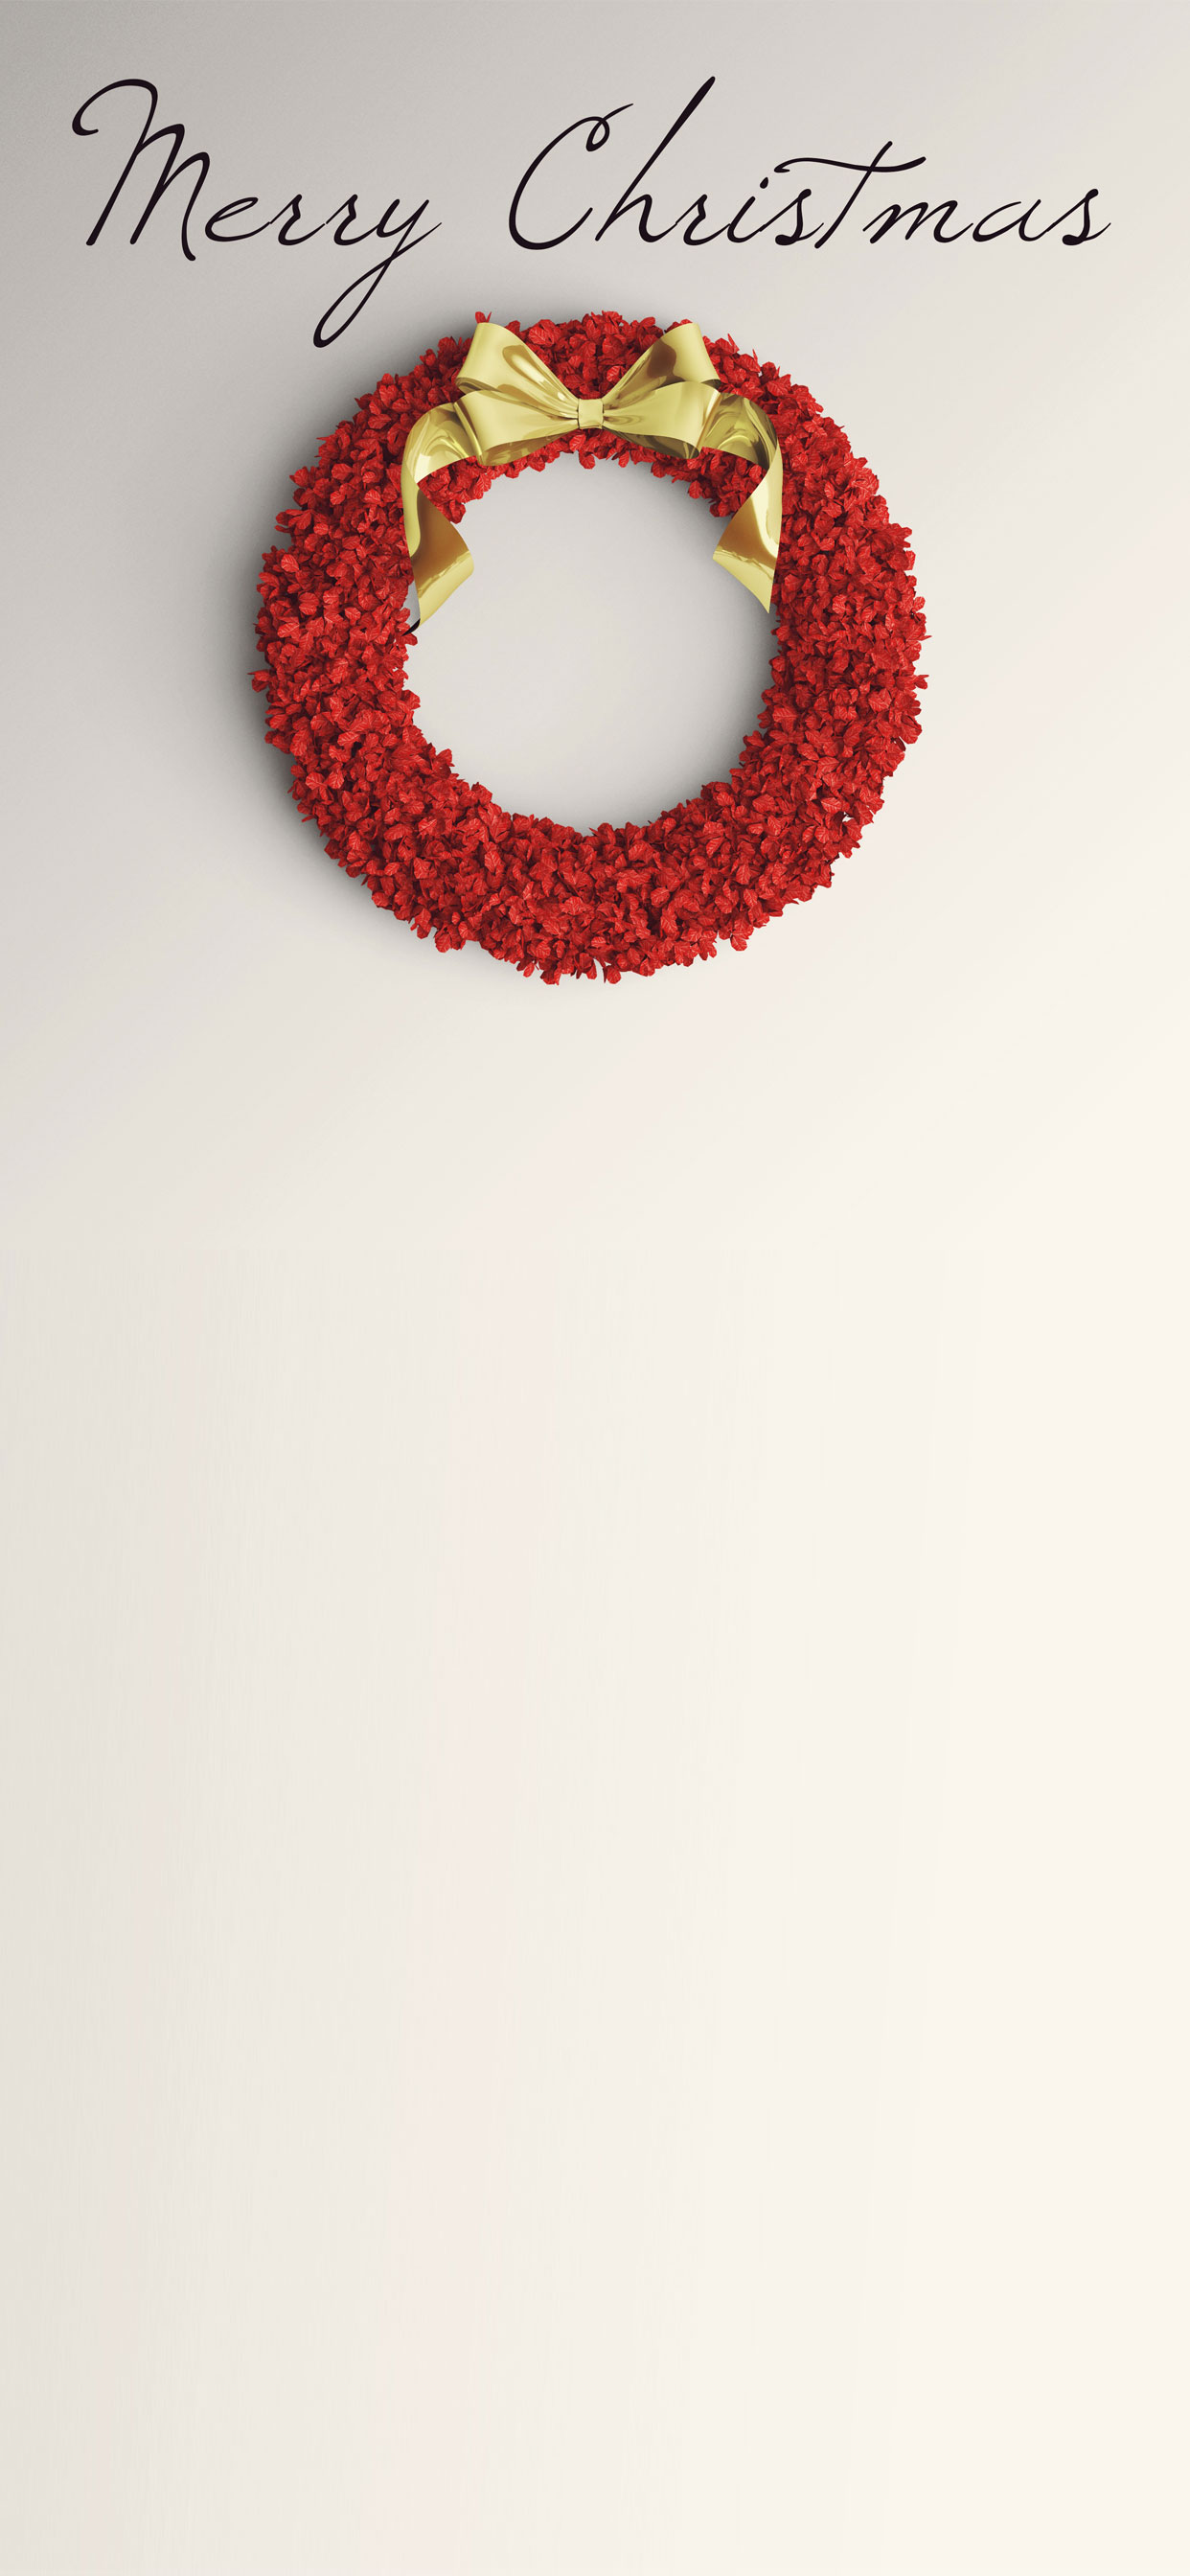 Merry-Christmas-iPhone-Xs-Max-Wallpaper-1.jpg